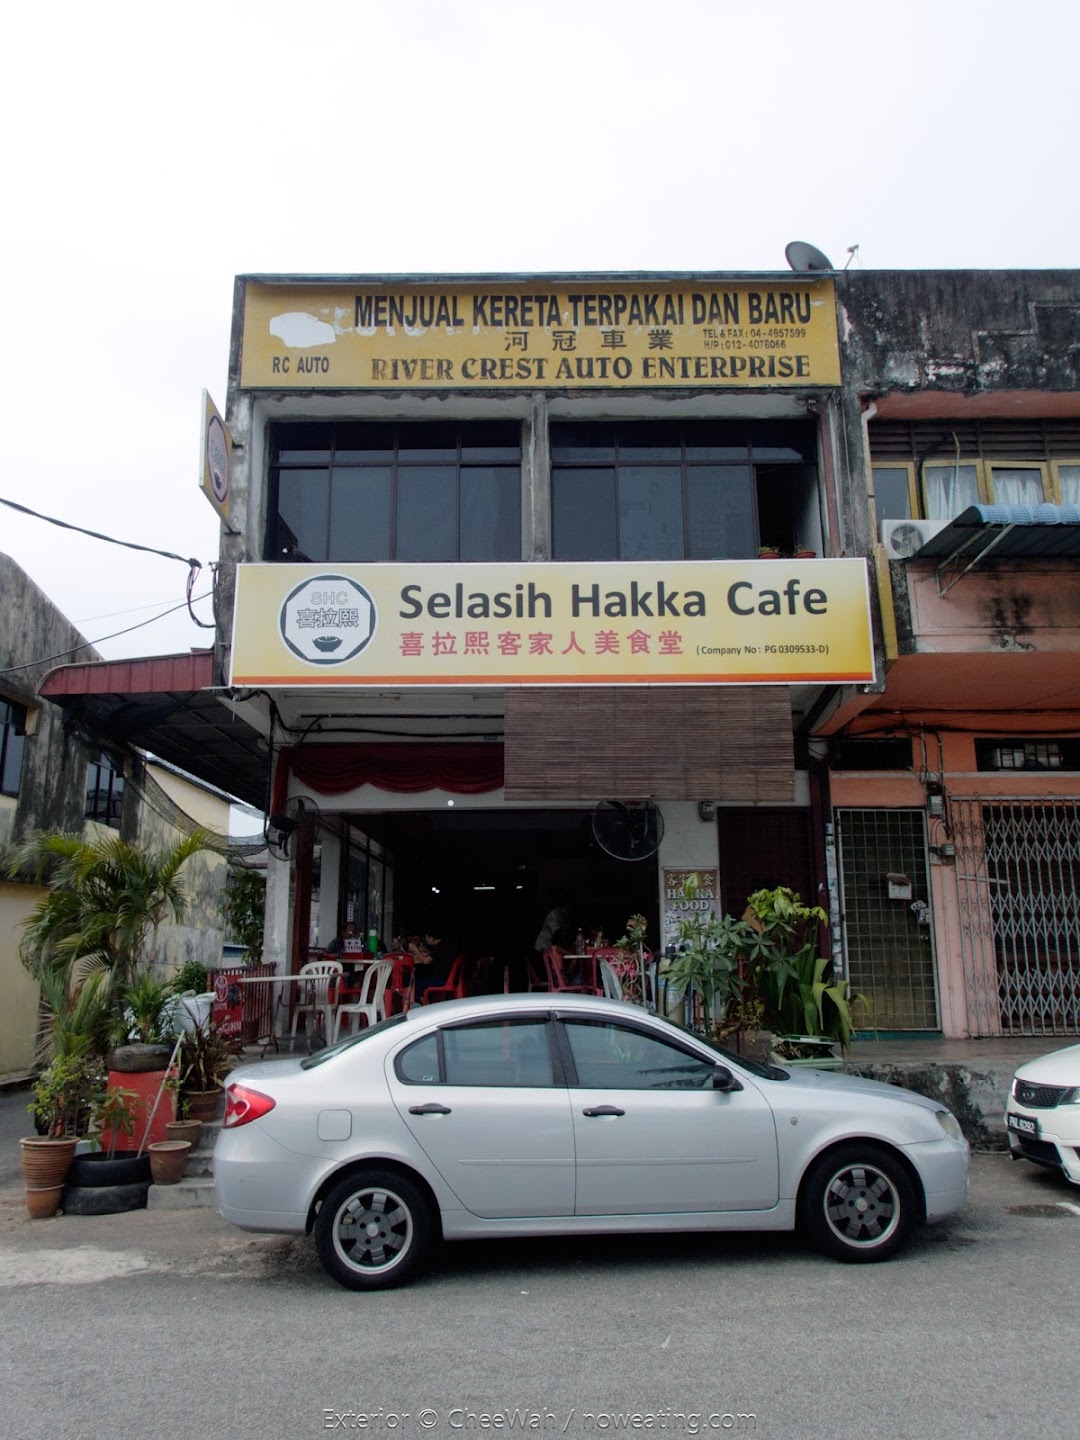 Selasih Hakka Cafe